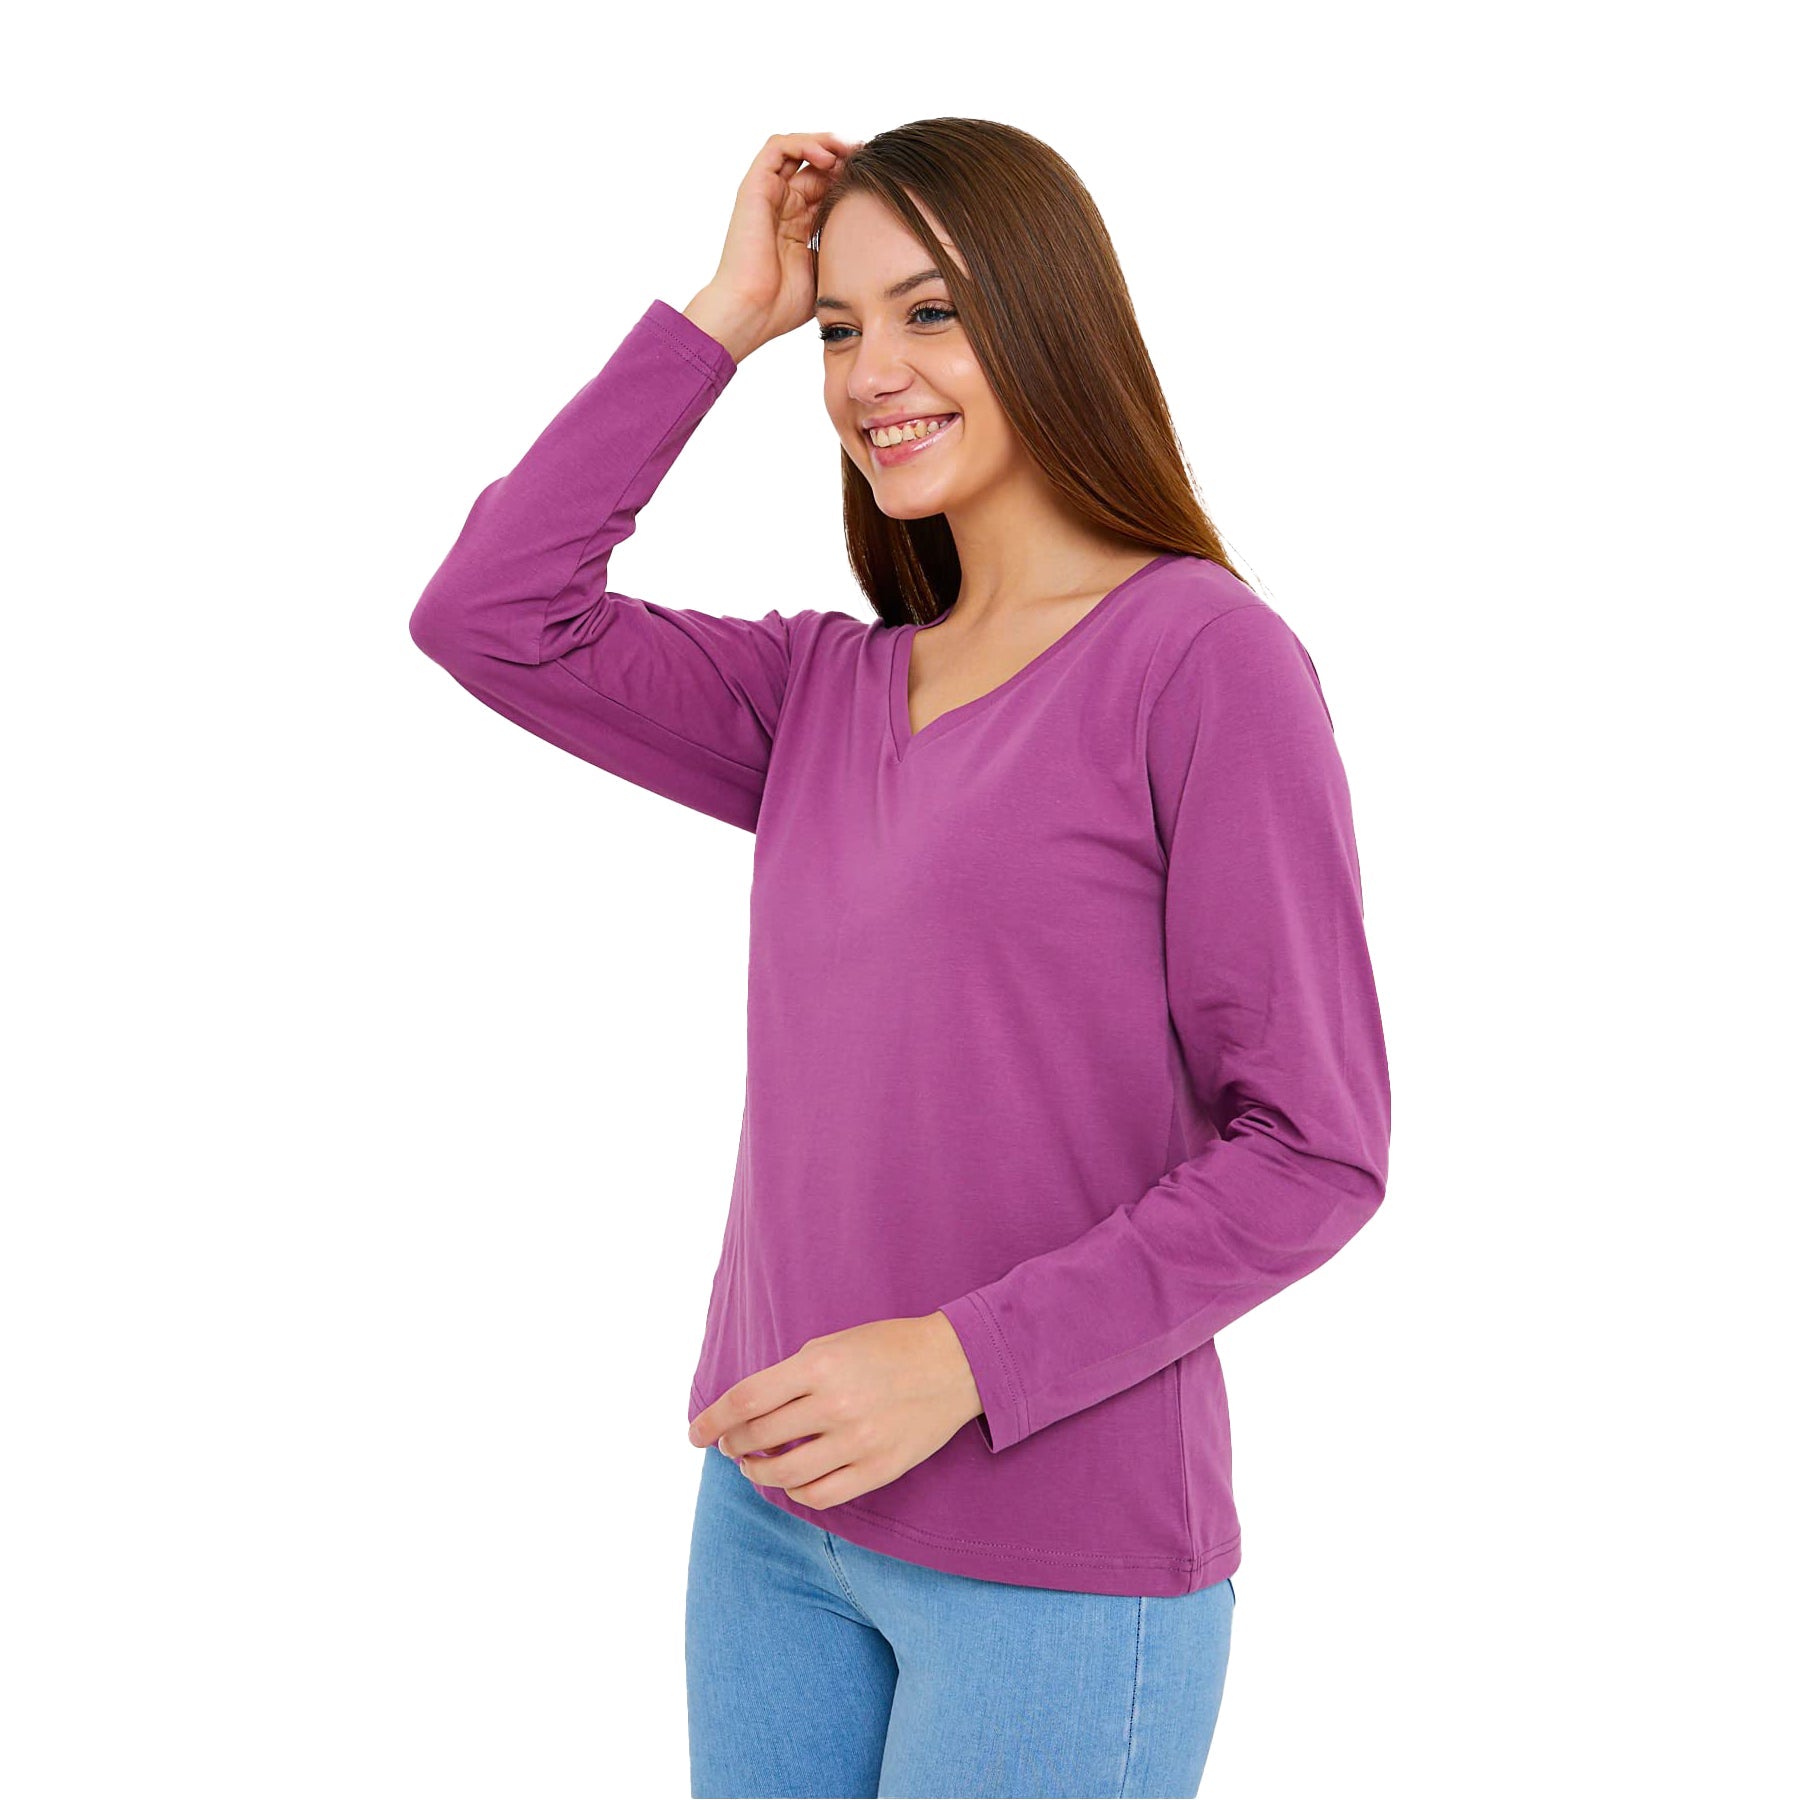 Buy vivid-viola Long Sleeve V-Neck Shirts for Women &amp; Girls - Colorful Pima Cotton